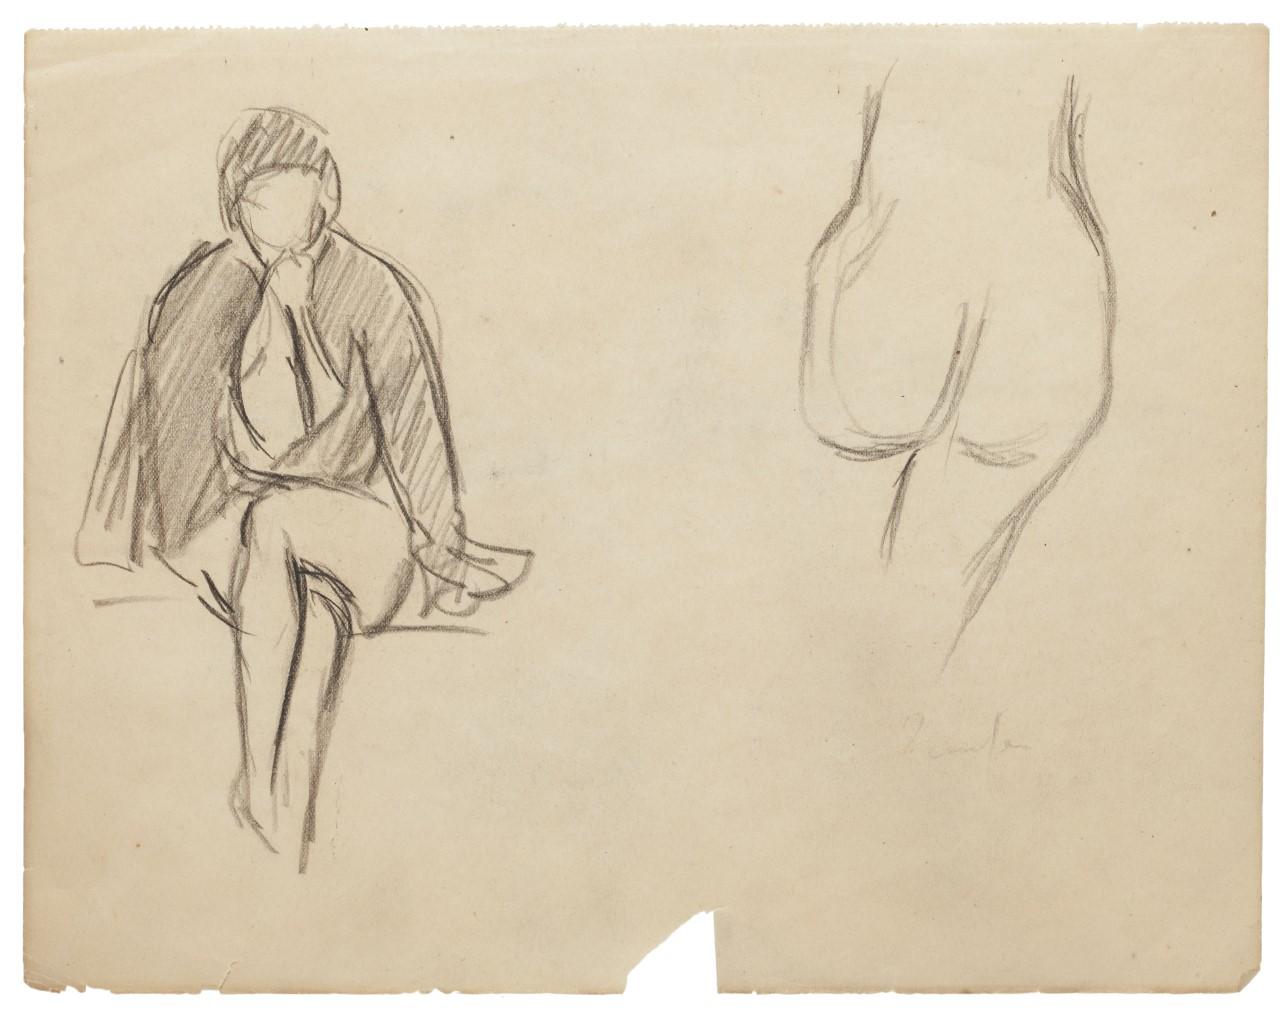 Nude Studies - Original Drawing - 20th Century